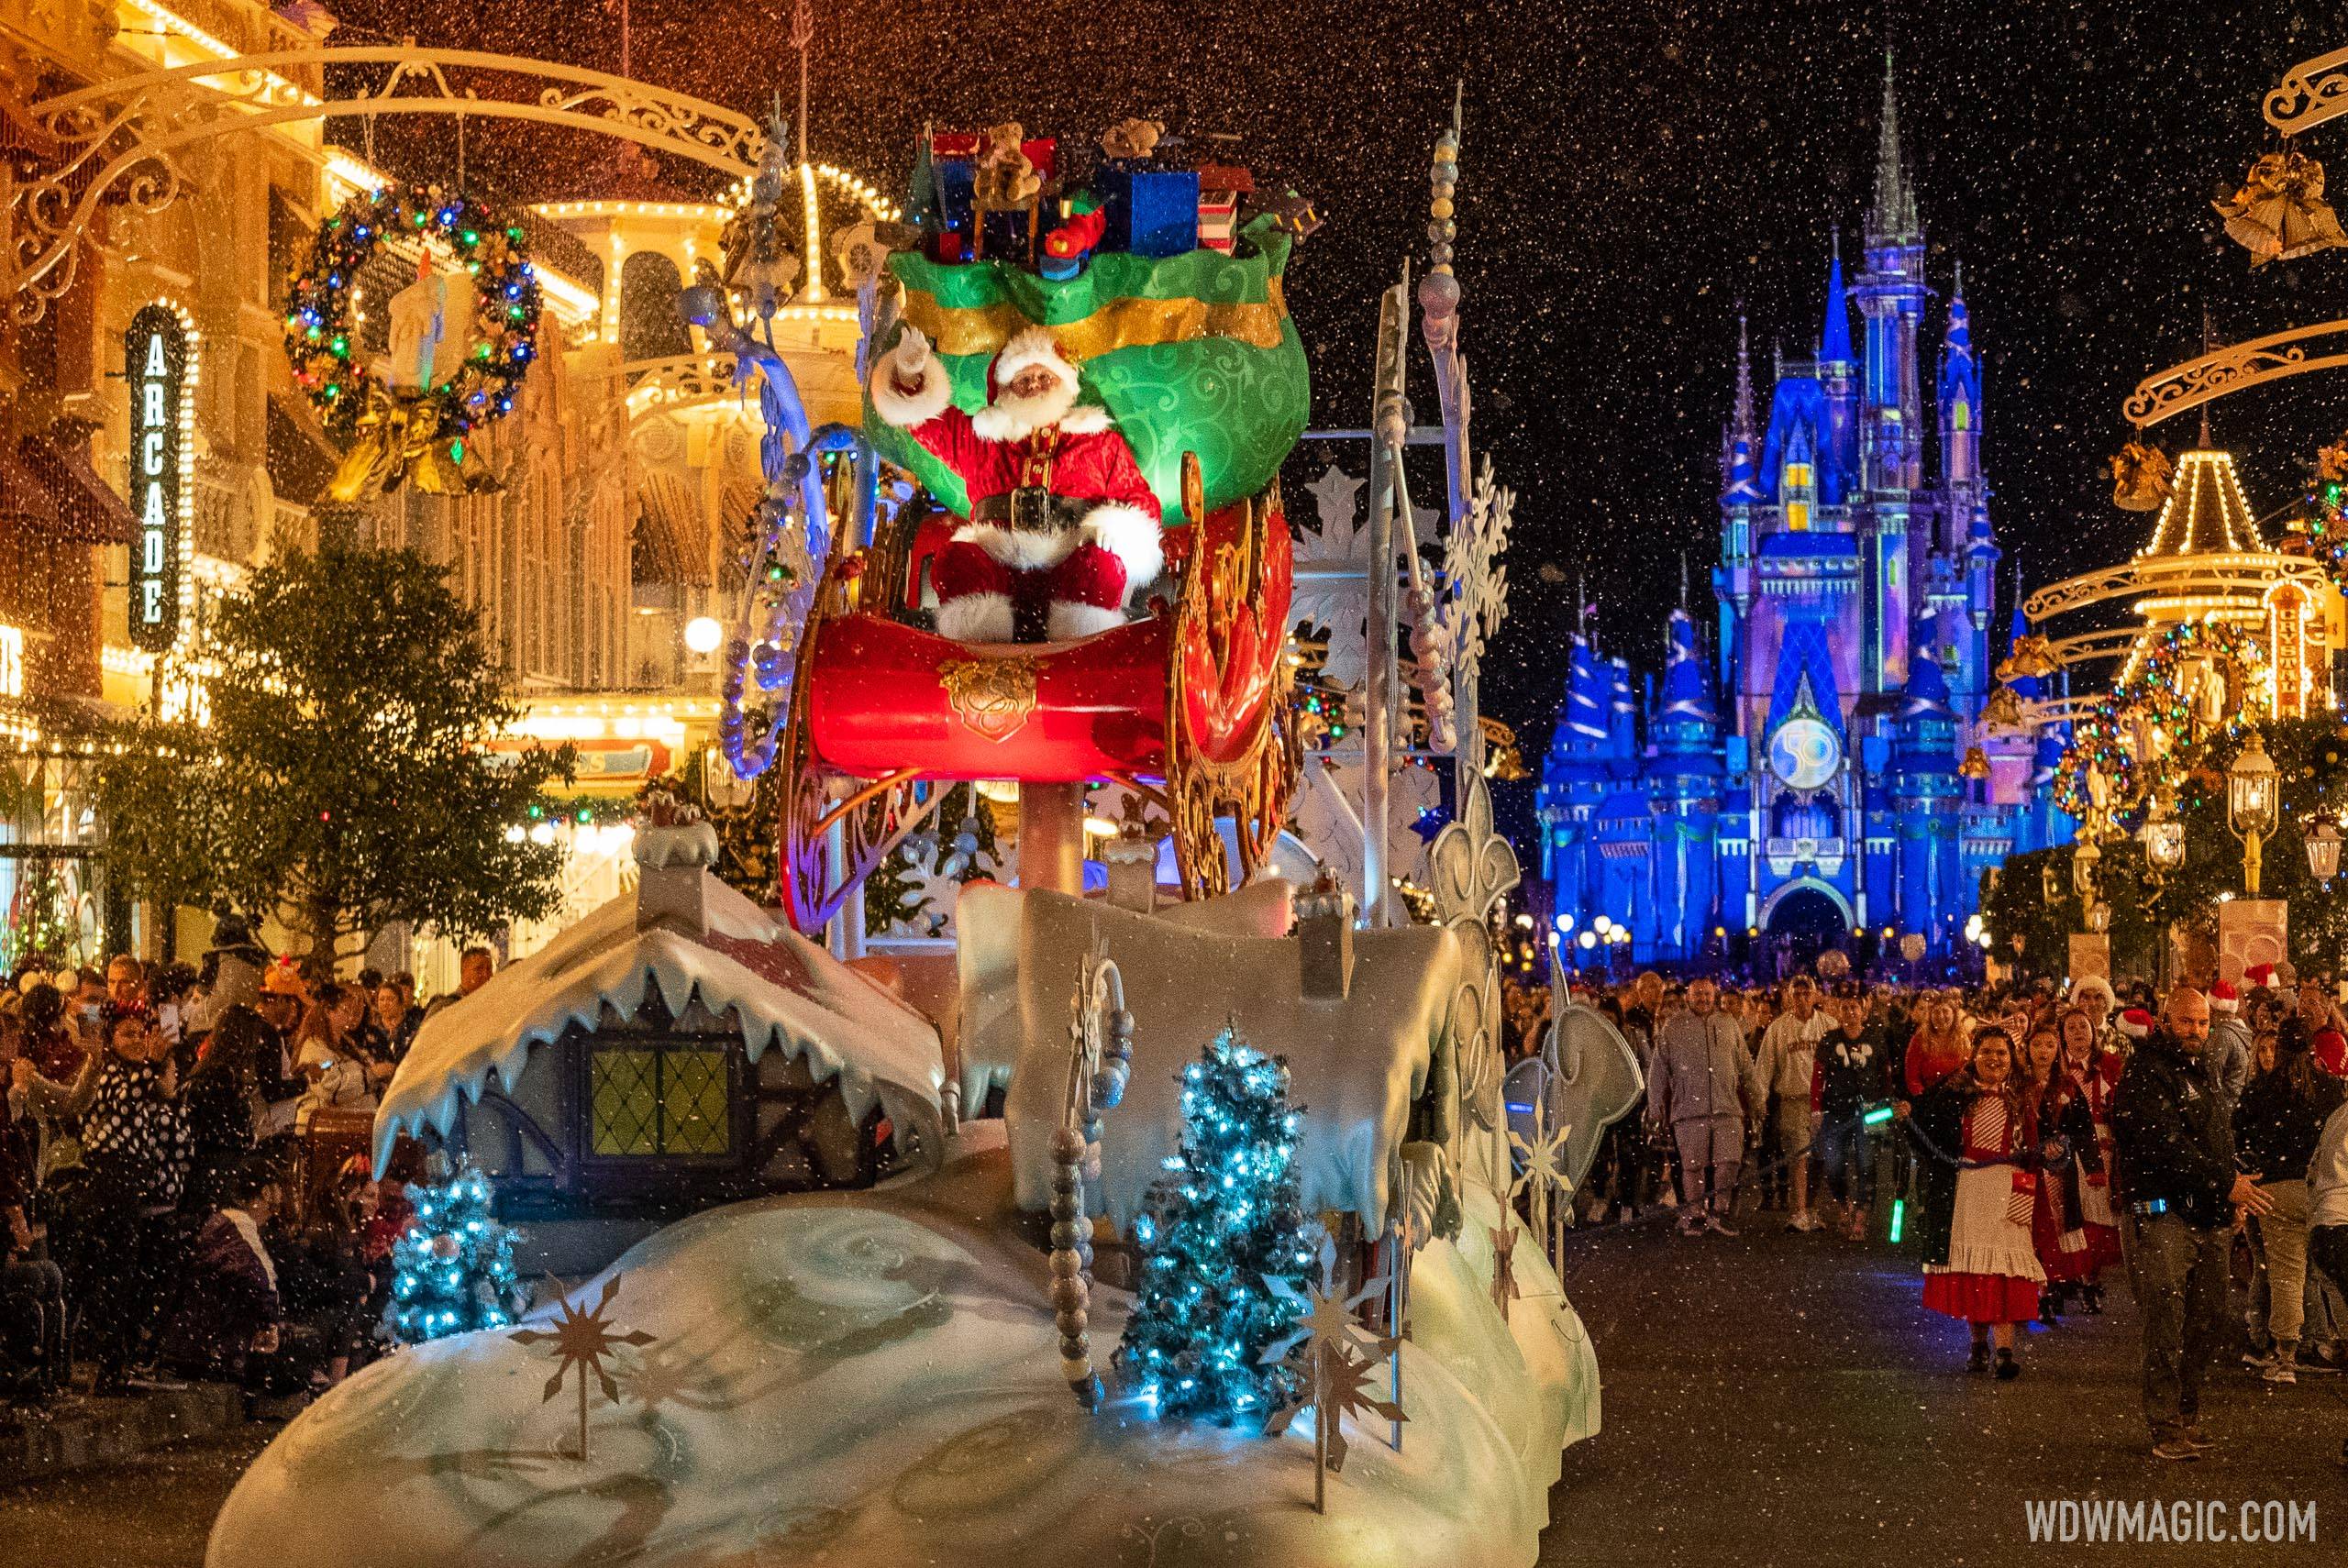 Santa has always been represented as a white man at Walt Disney World